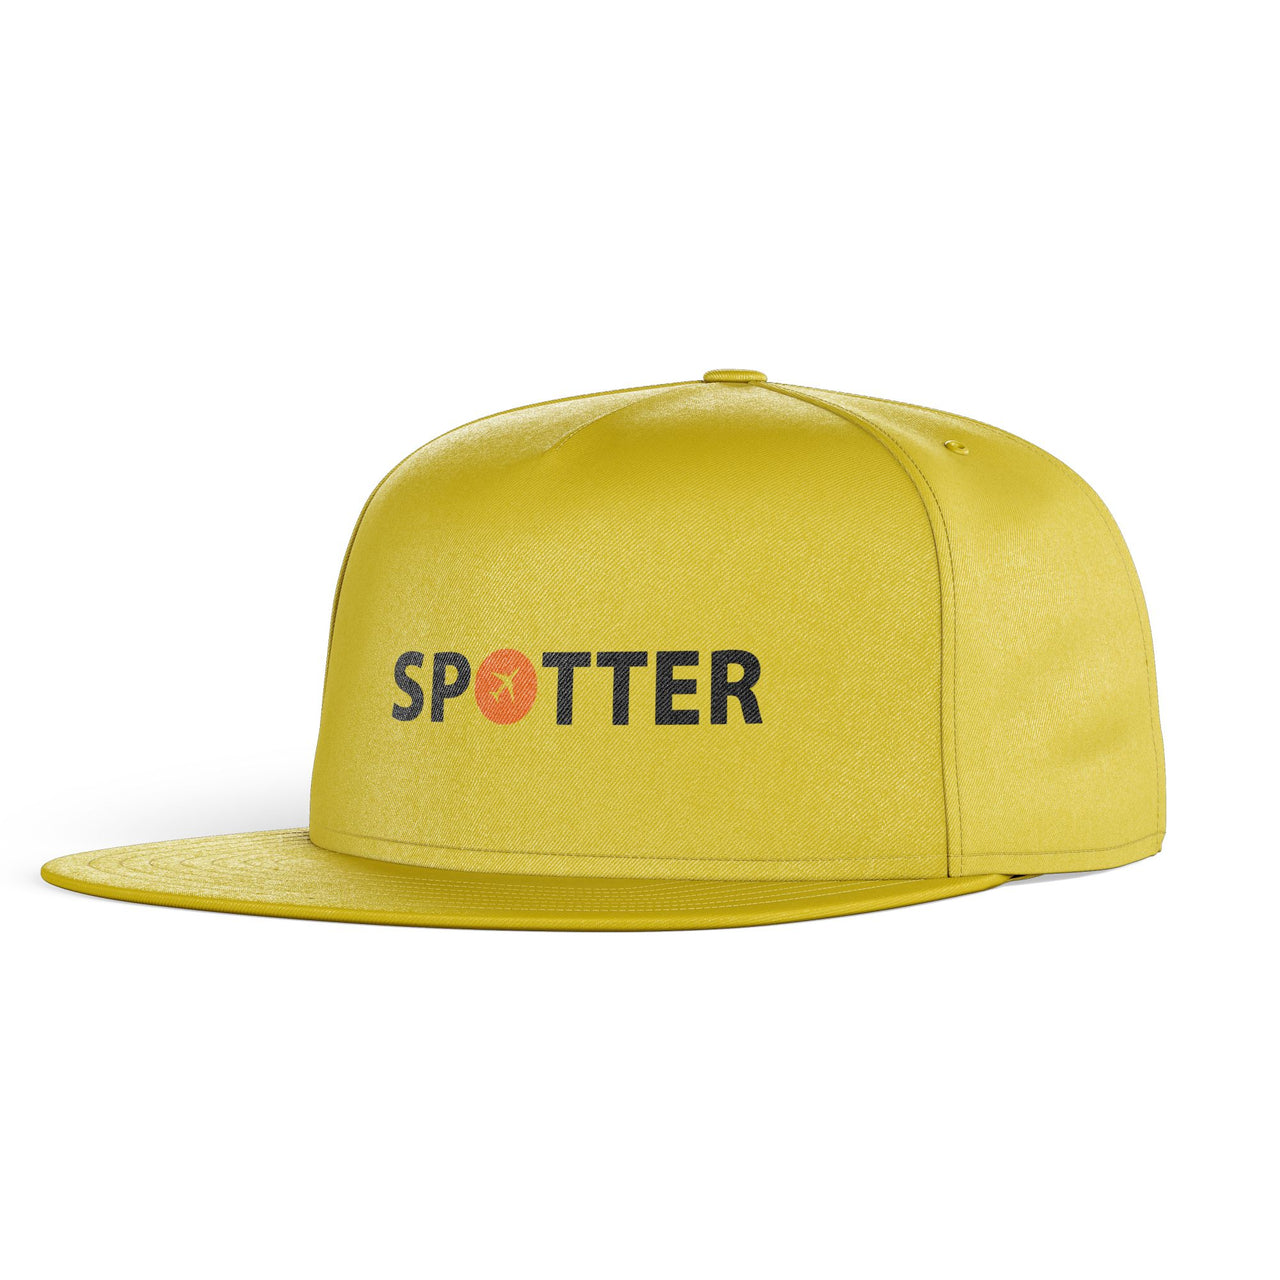 Spotter Designed Snapback Caps & Hats